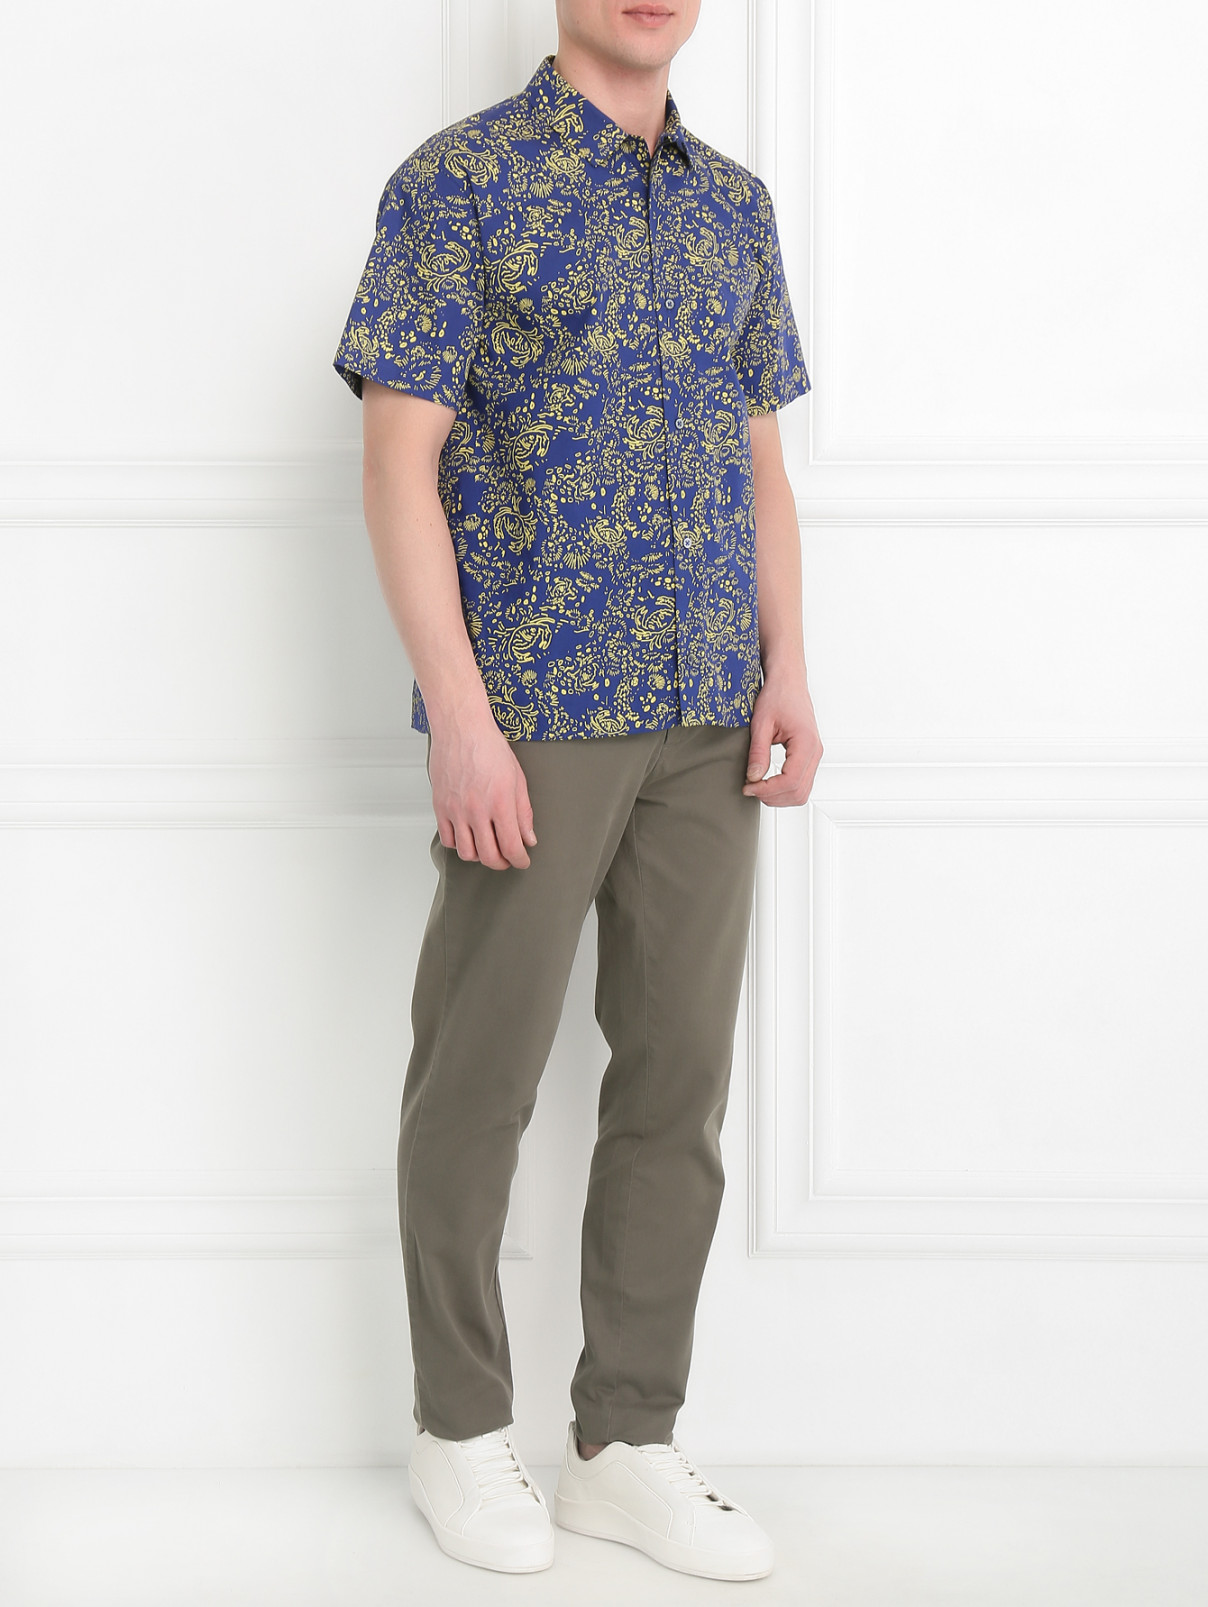 Рубашка с коротким рукавом из хлопка Jil Sander  –  Модель Общий вид  – Цвет:  Синий